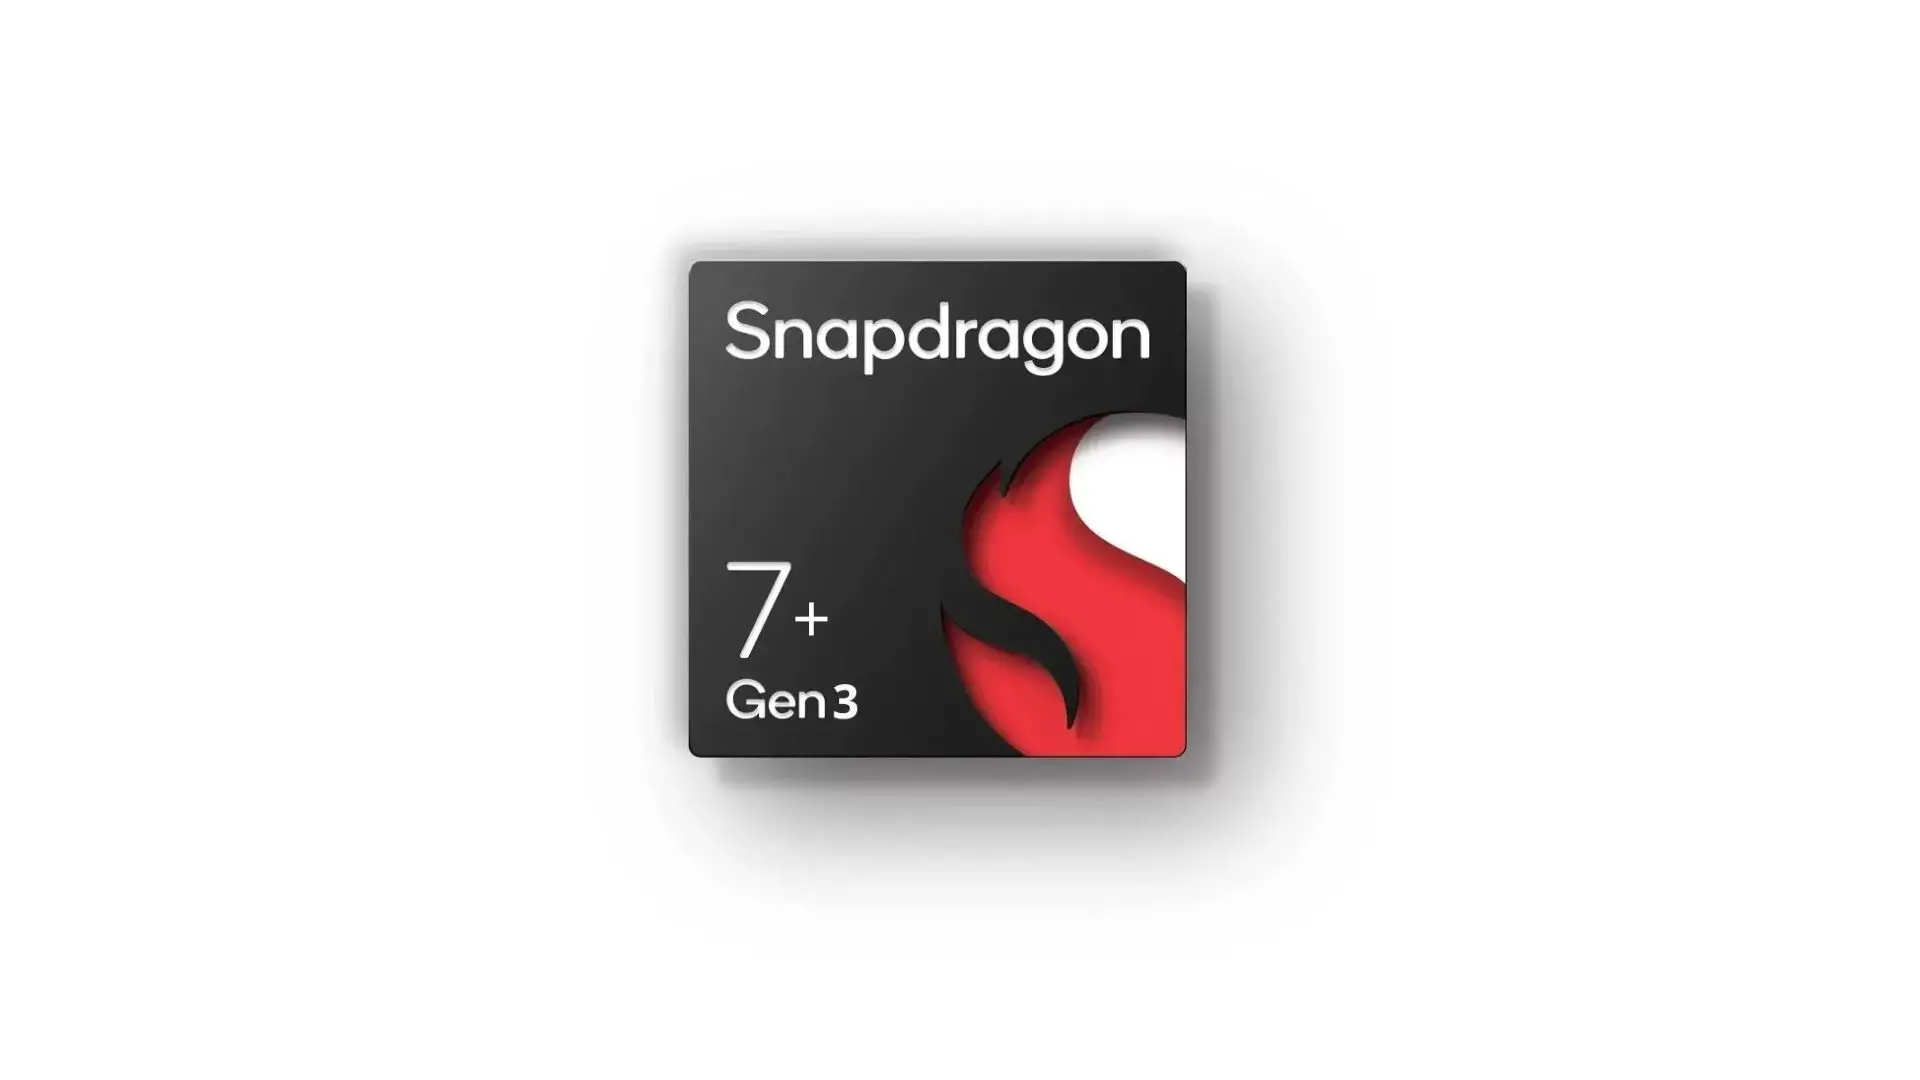 Snapdragon 7 Plus Gen 3